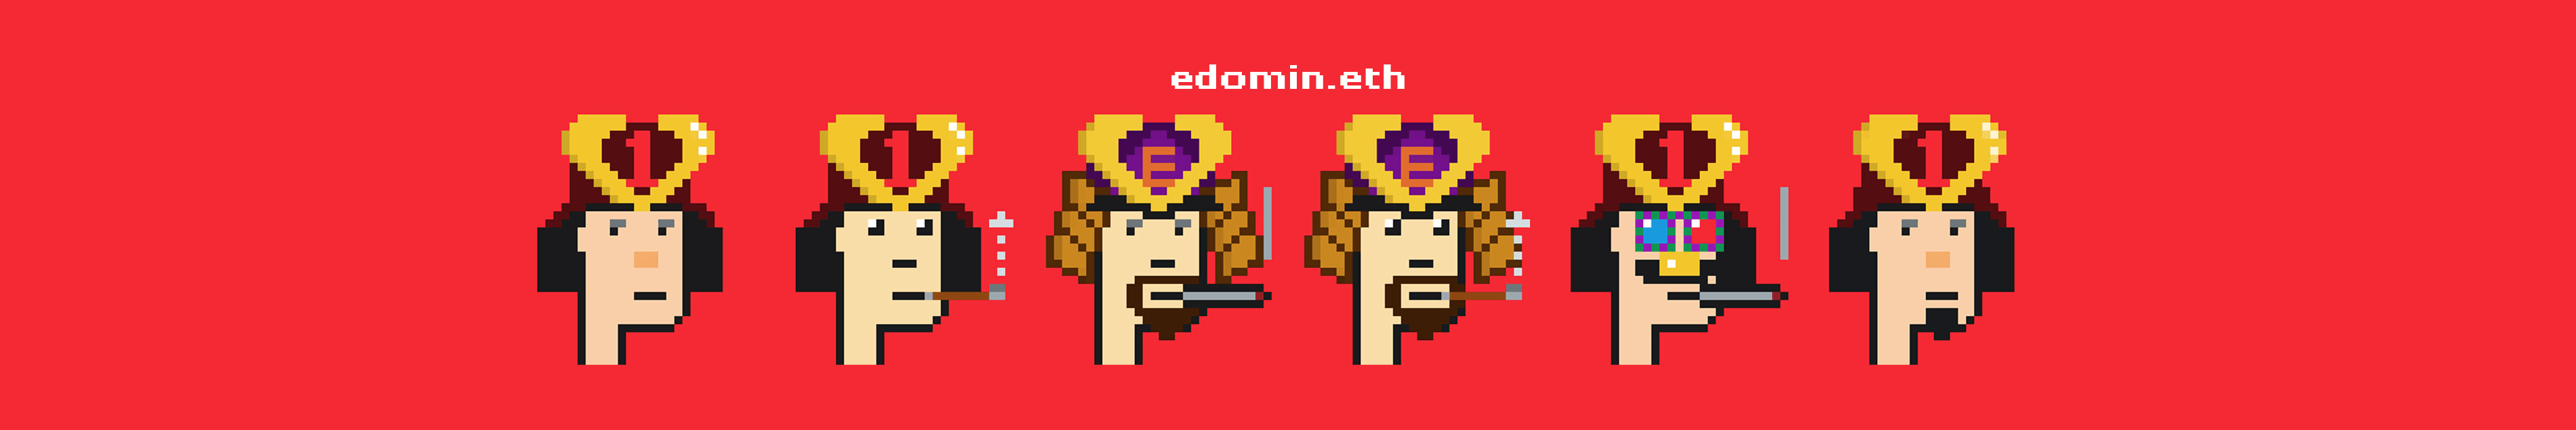 edomin.eth banner